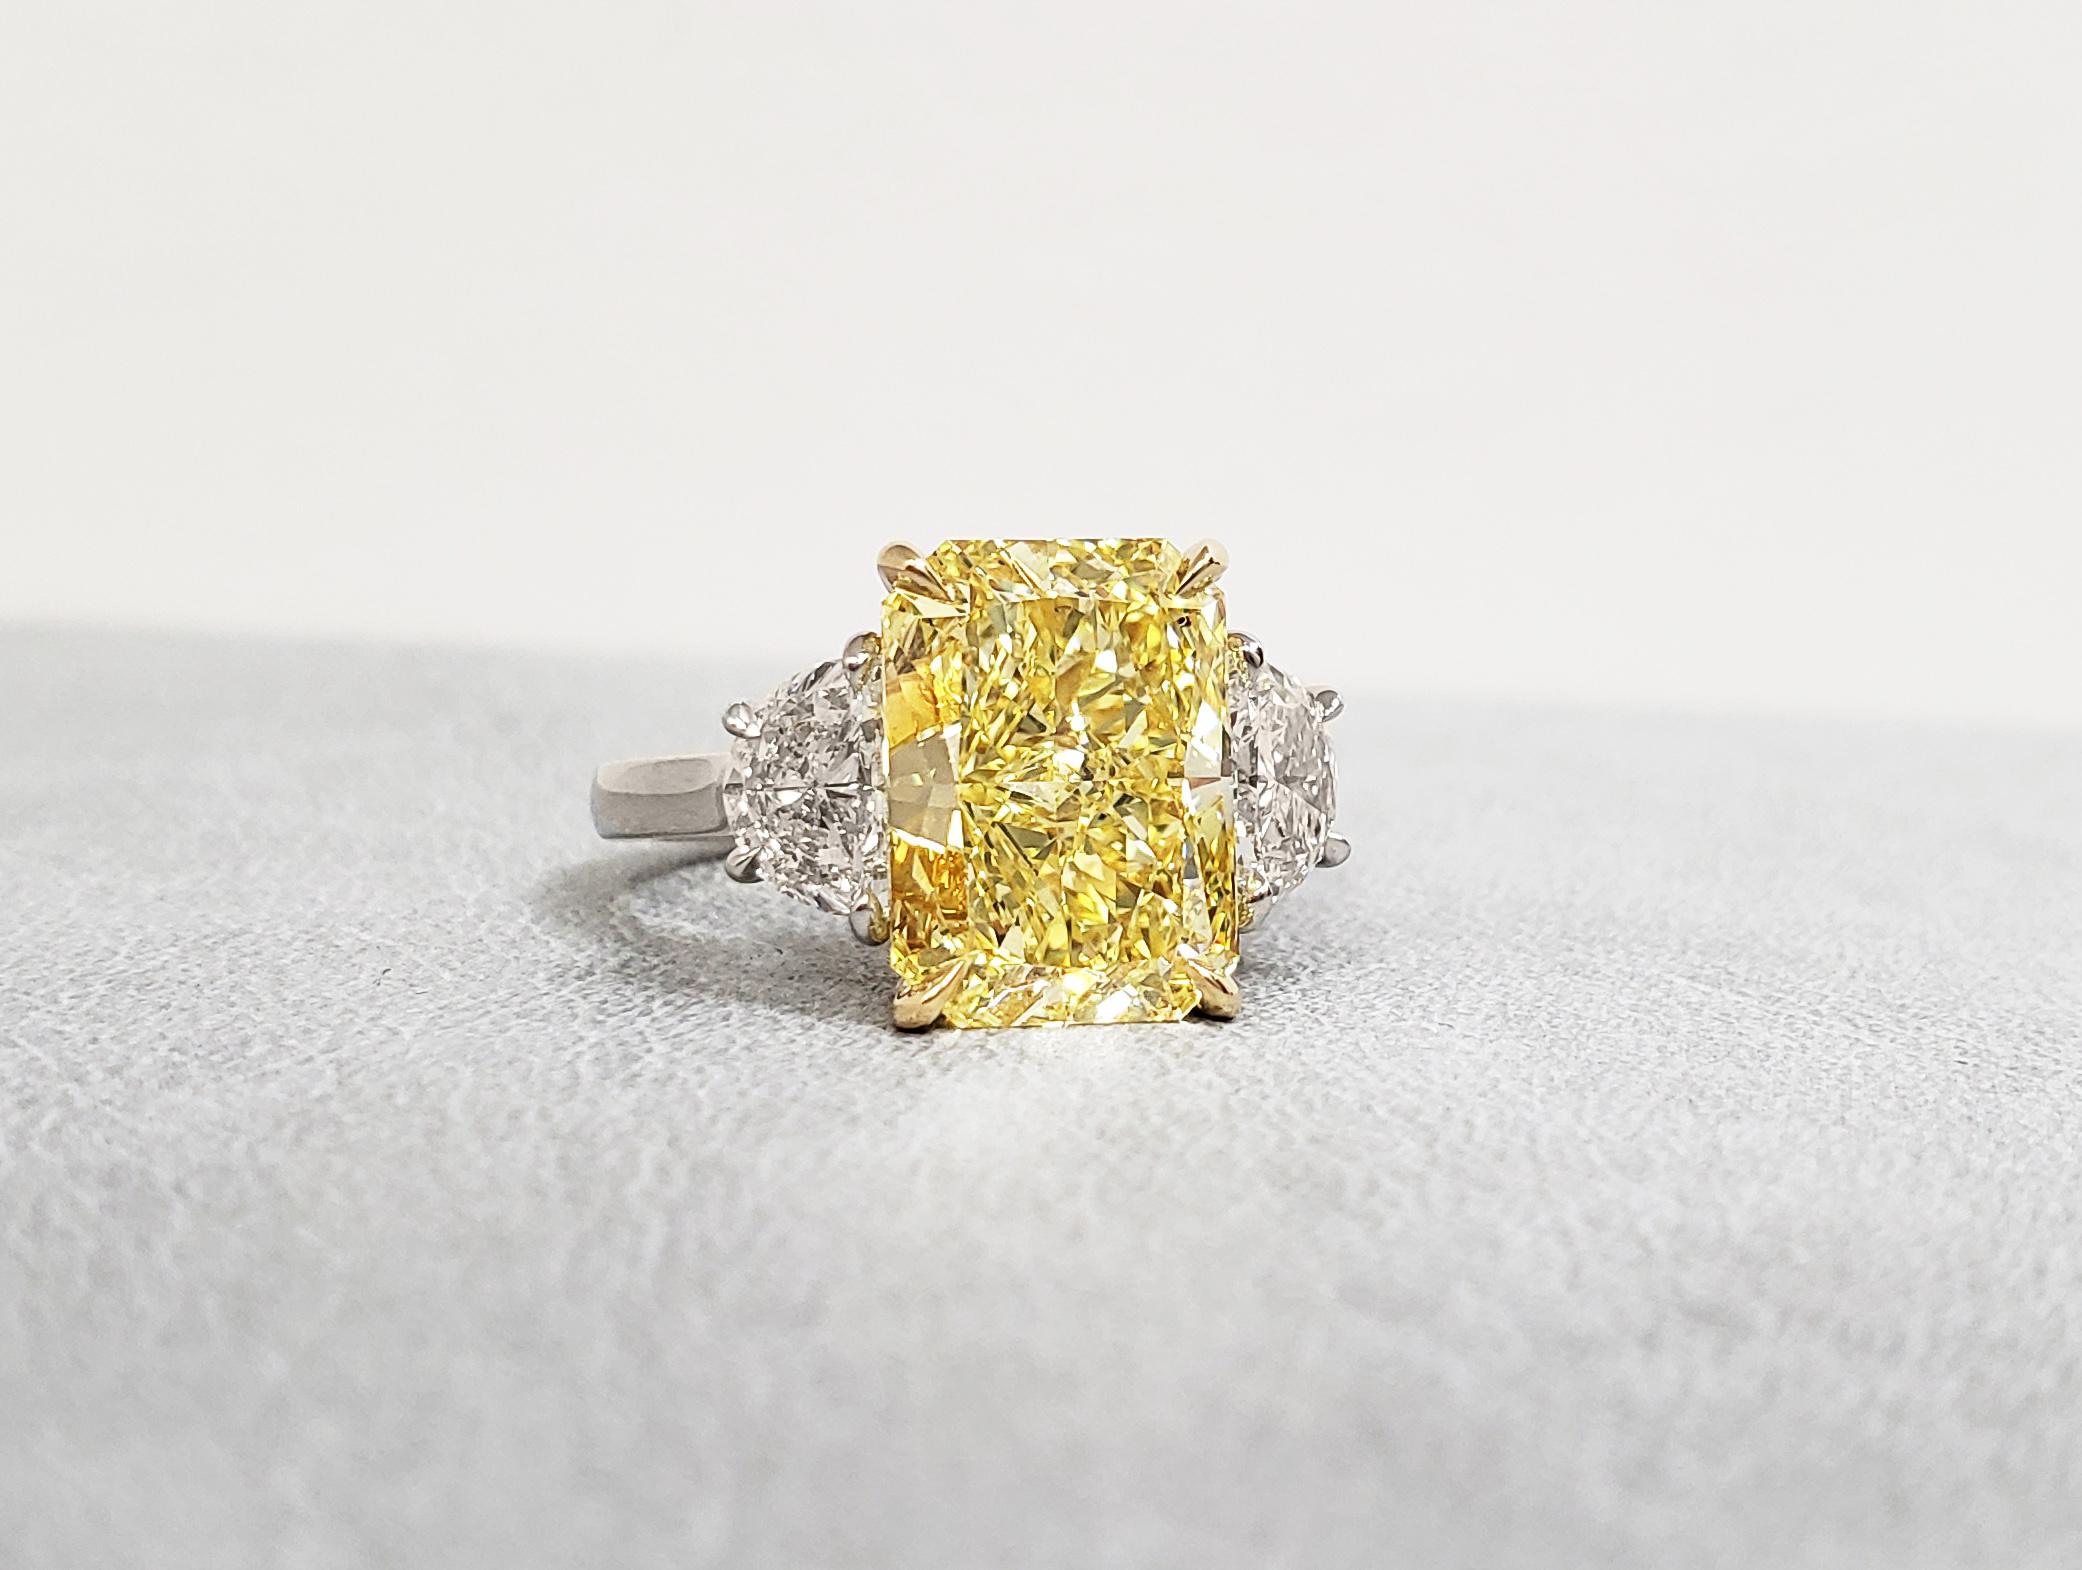 Scarselli 5 Karat Fancy Intense Yellow Diamond Ring in Platin GIA zertifiziert 1